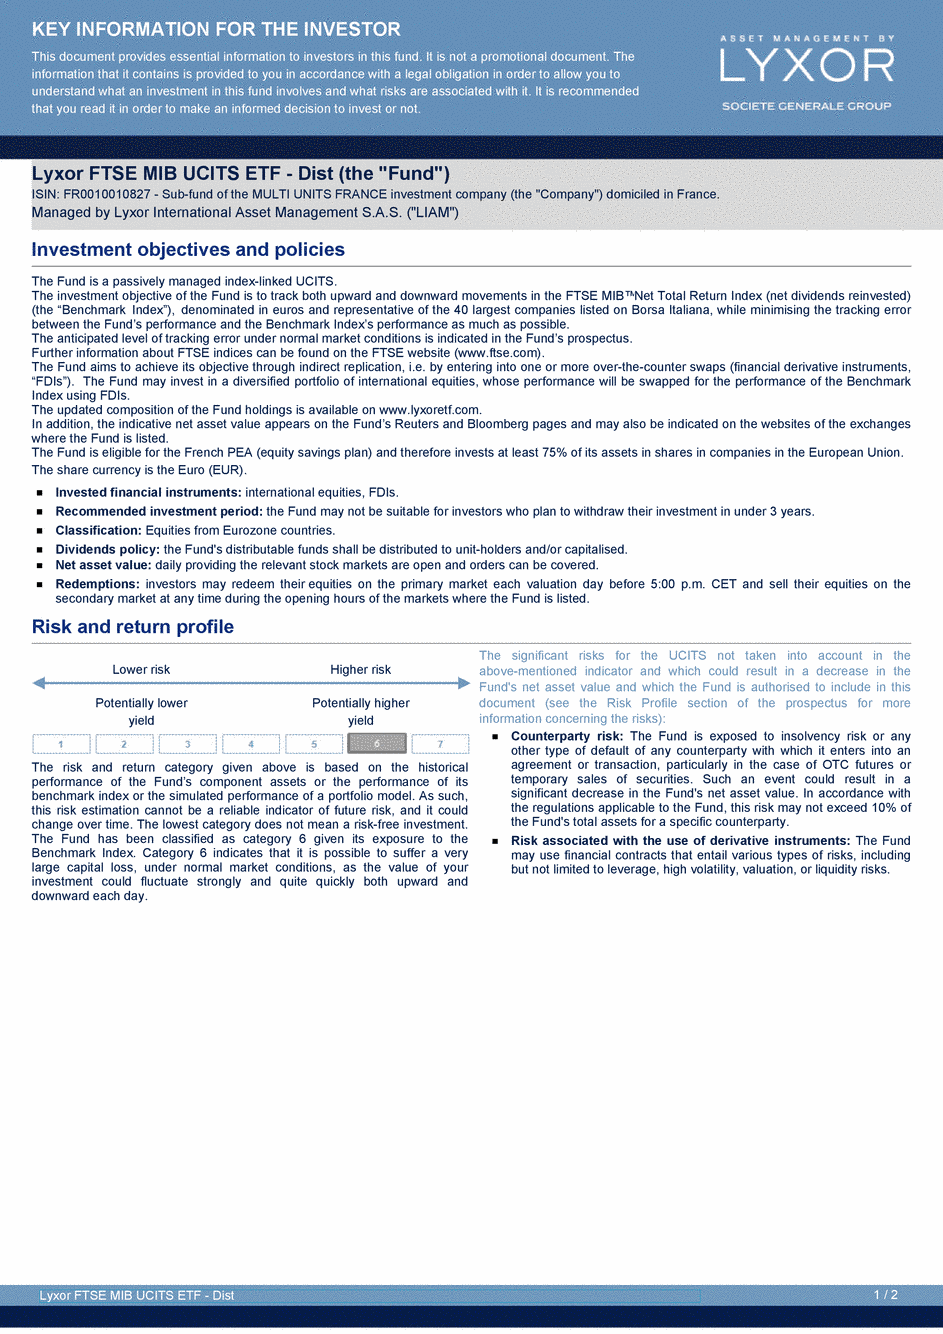 DICI Lyxor FTSE MIB UCITS ETF - Dist - 19/02/2020 - Anglais